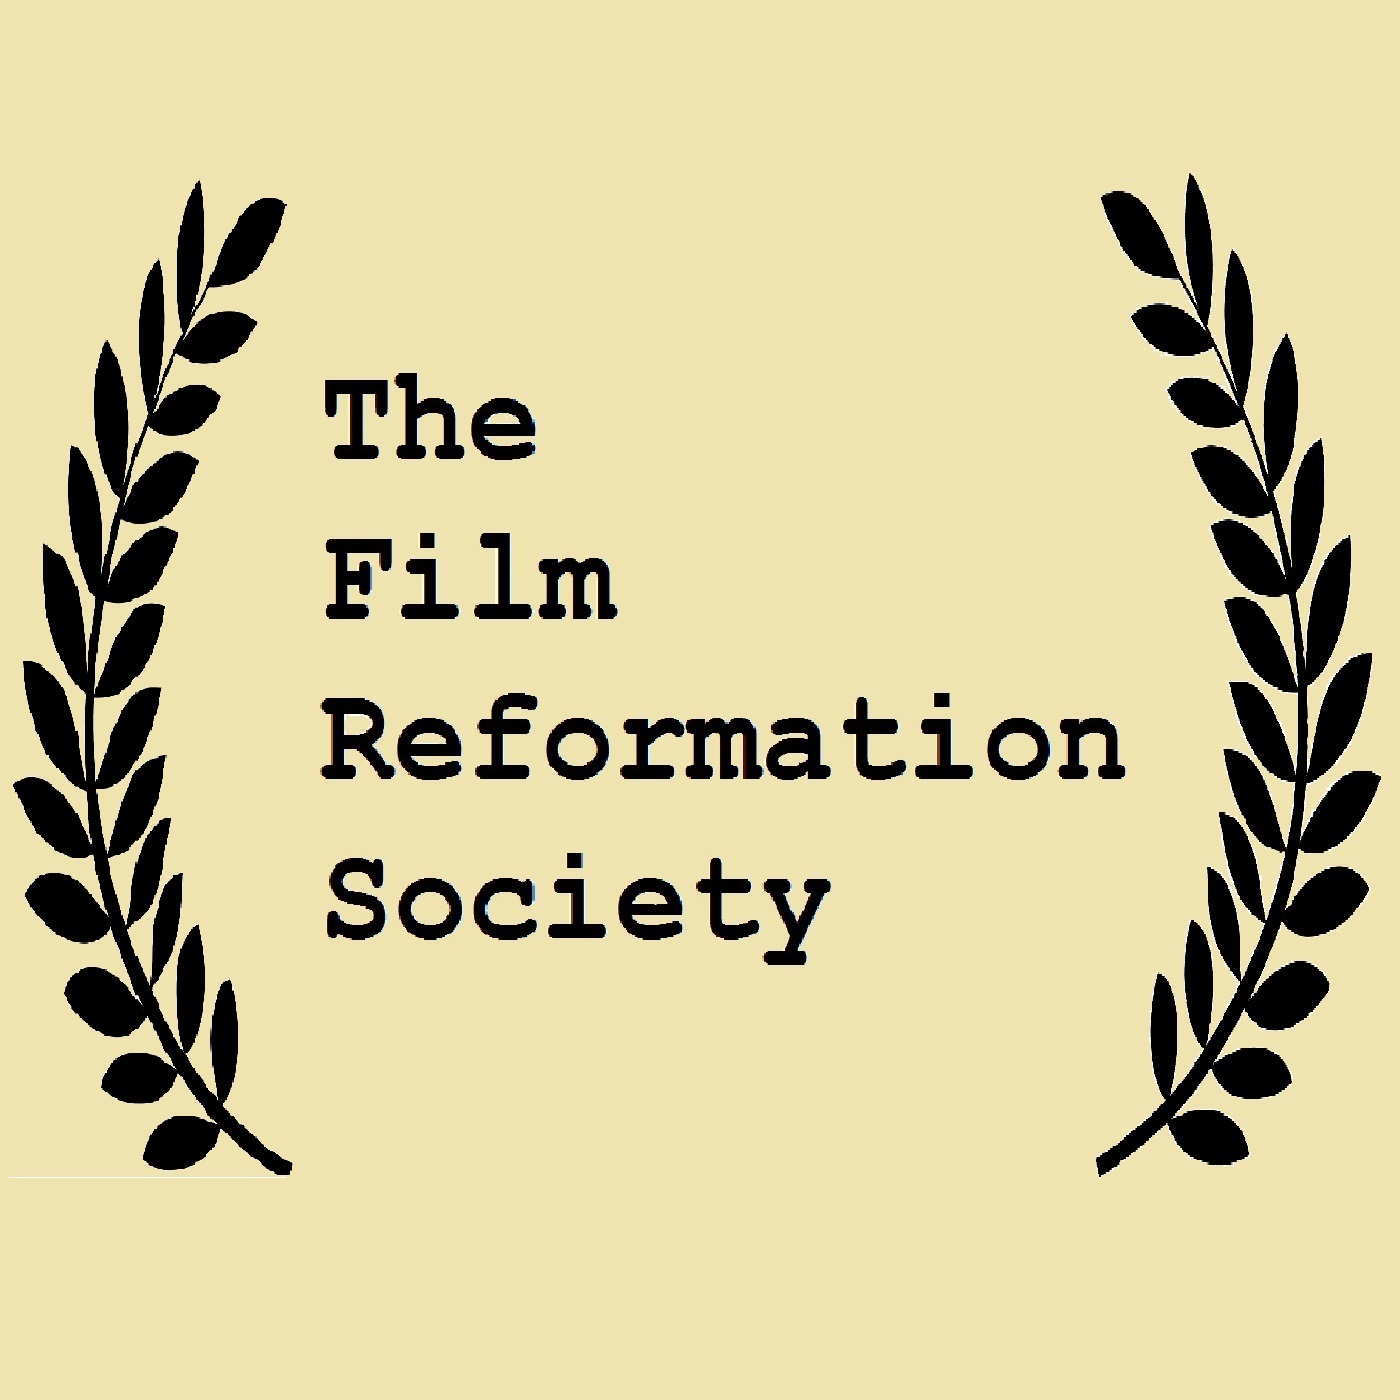 The Film Reformation Society